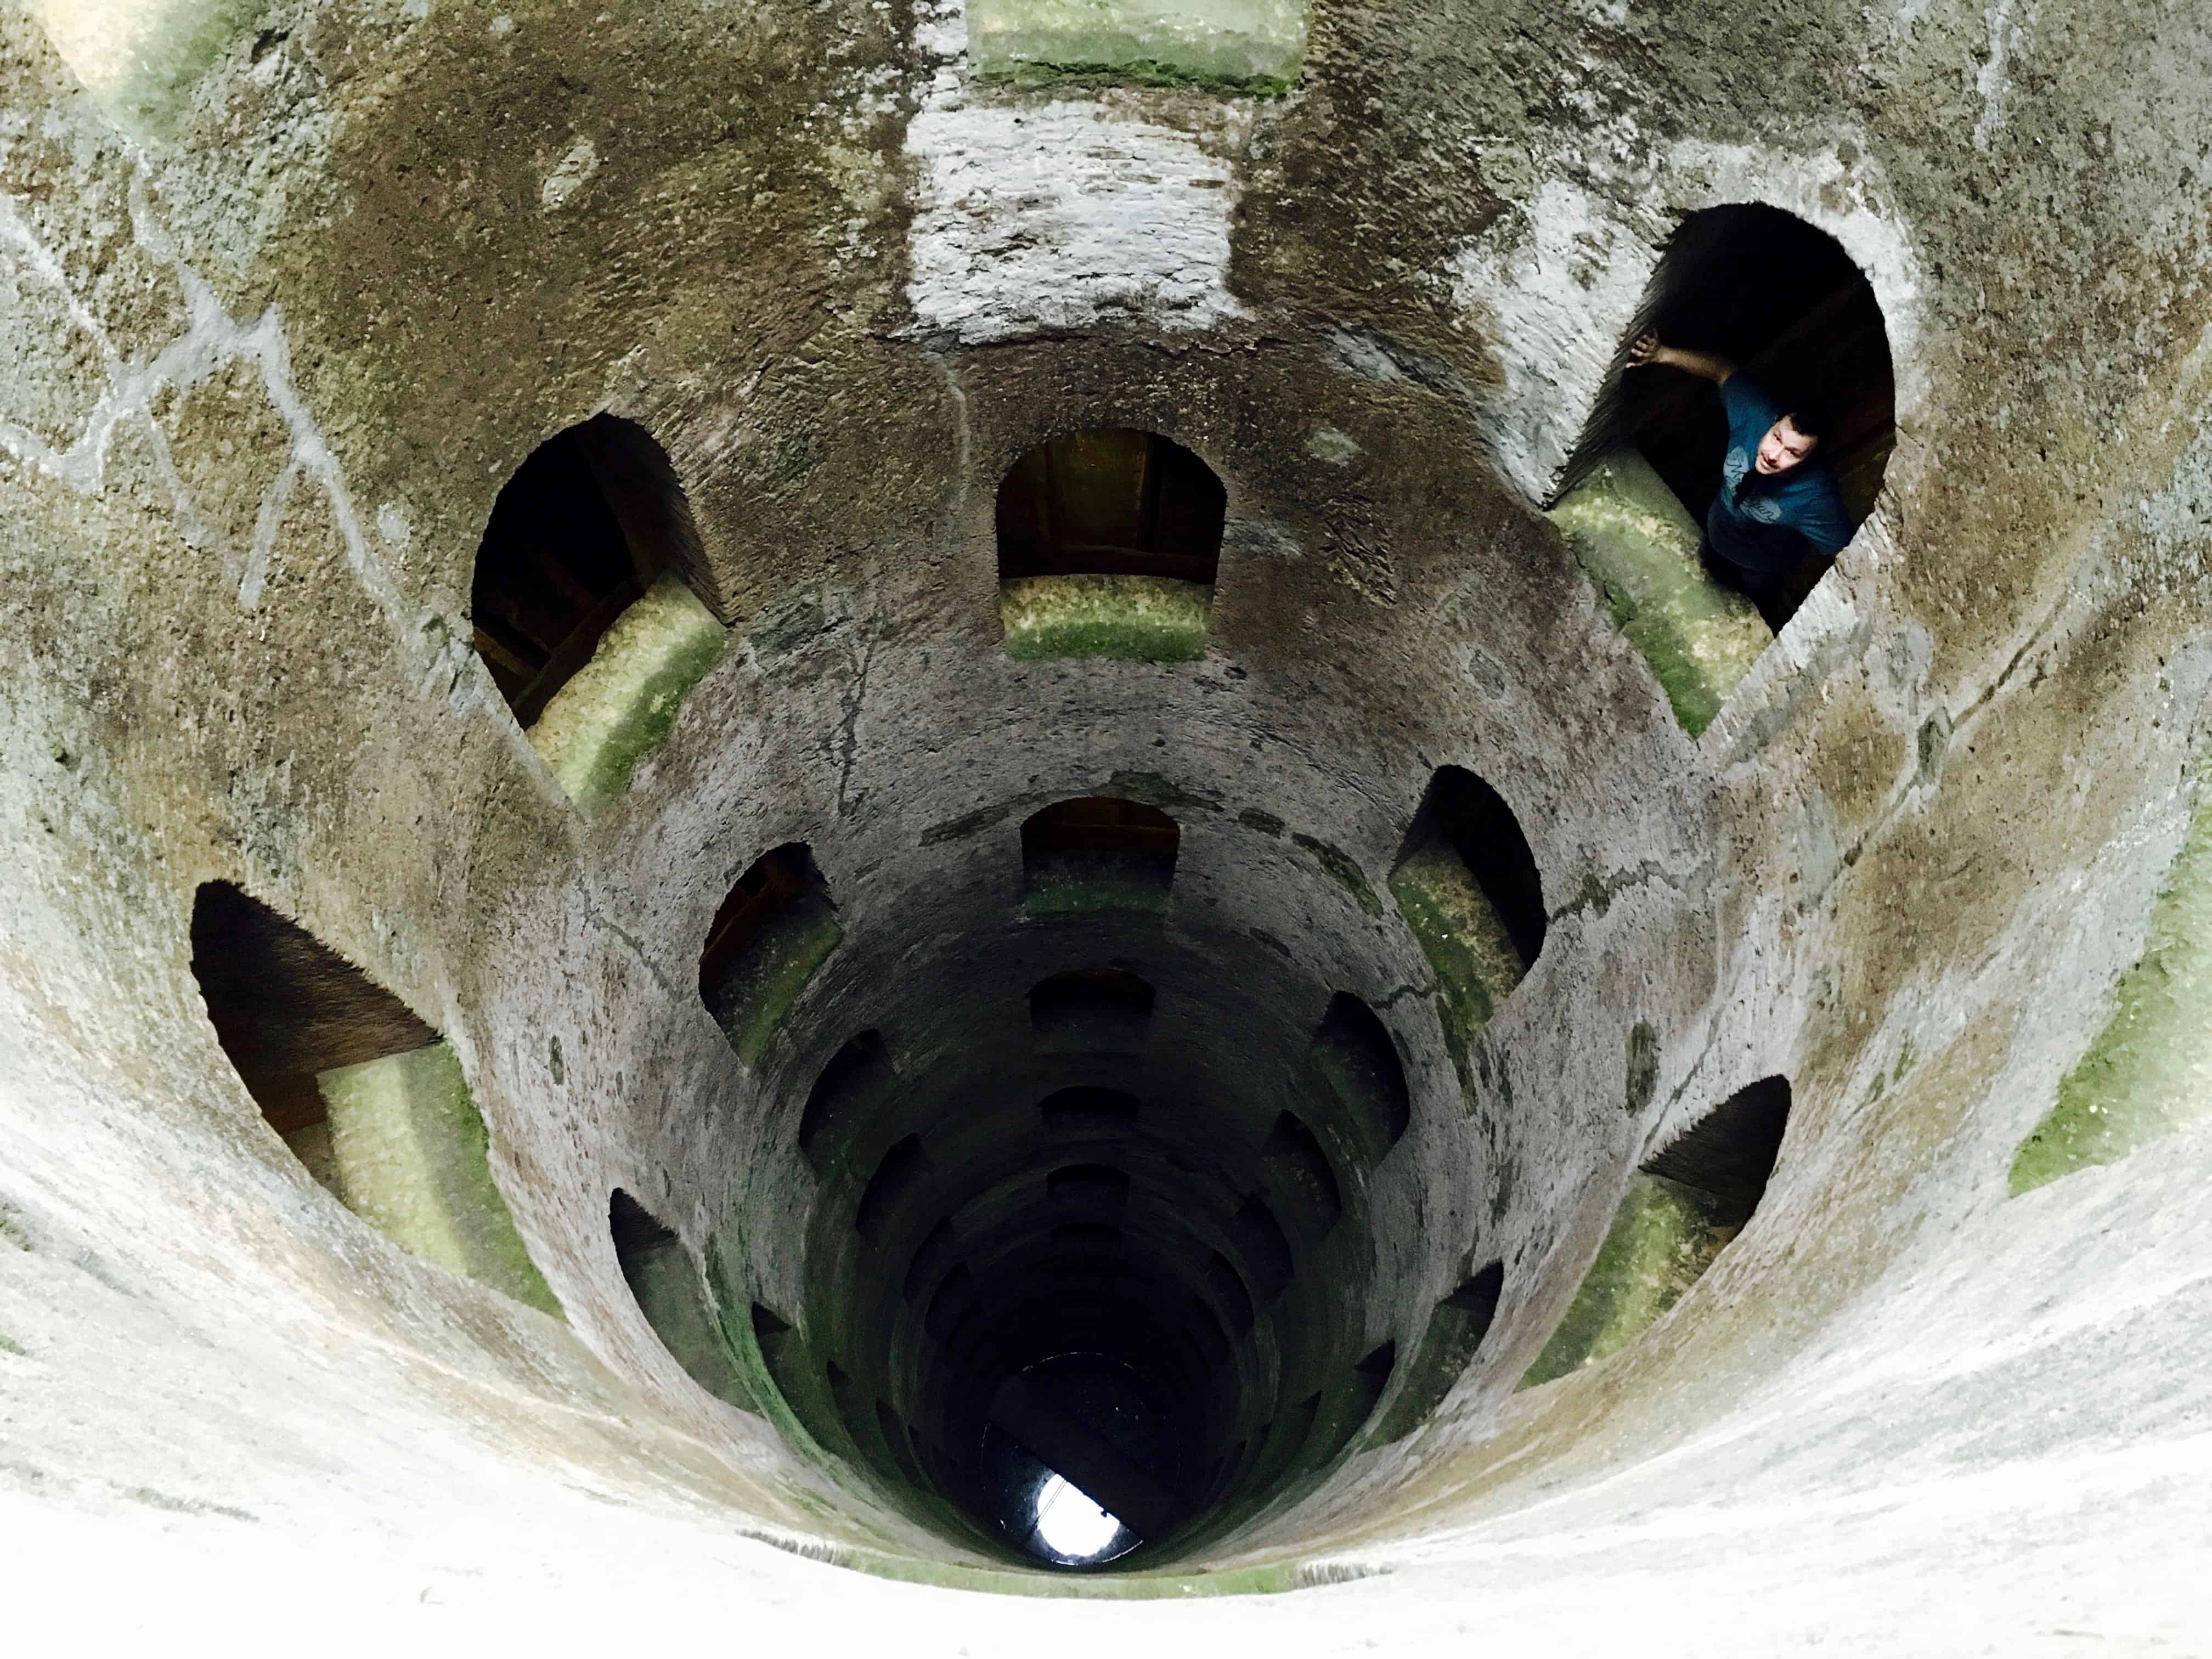 Looking down into the Pozzo di San Patrizio (Well of St Patrick), in Orvieto, Italy